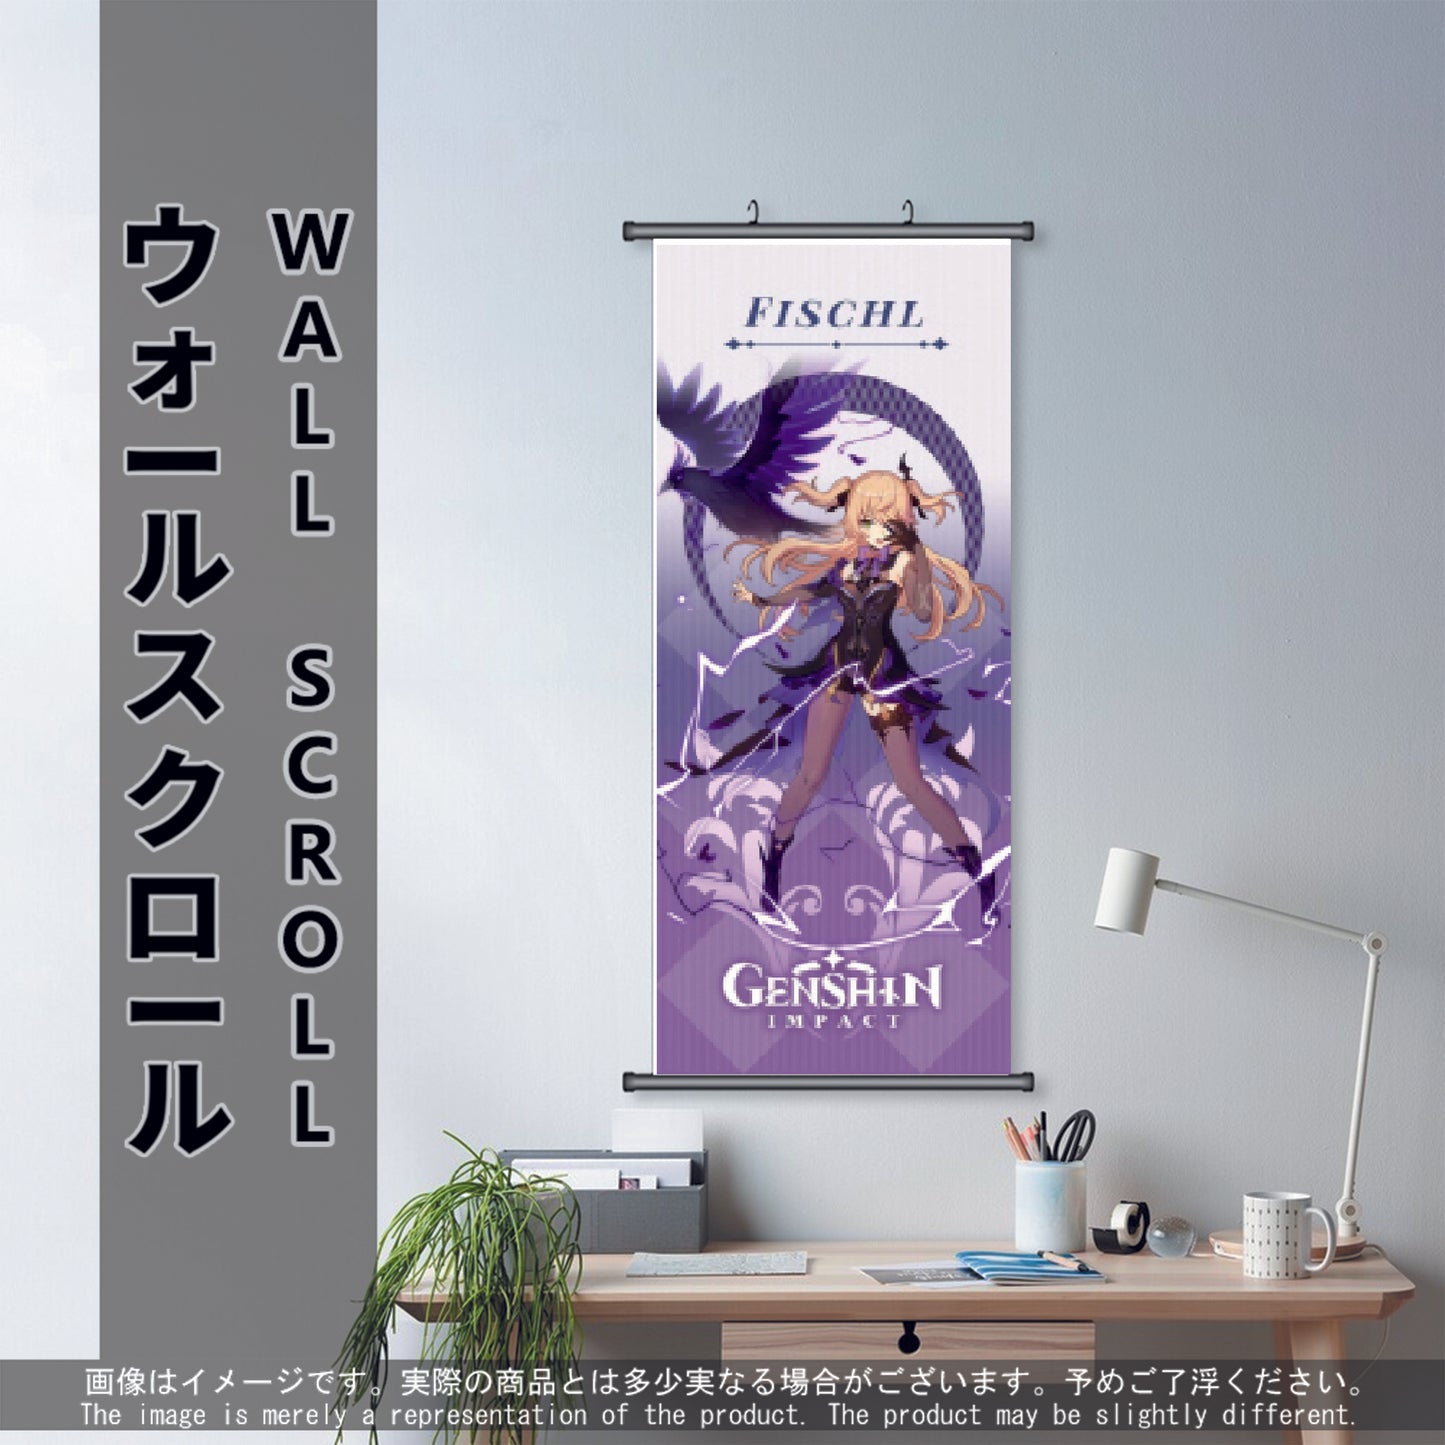 (GSN-ELECTRO-02) FISCHL Genshin Impact Anime Wall Scroll